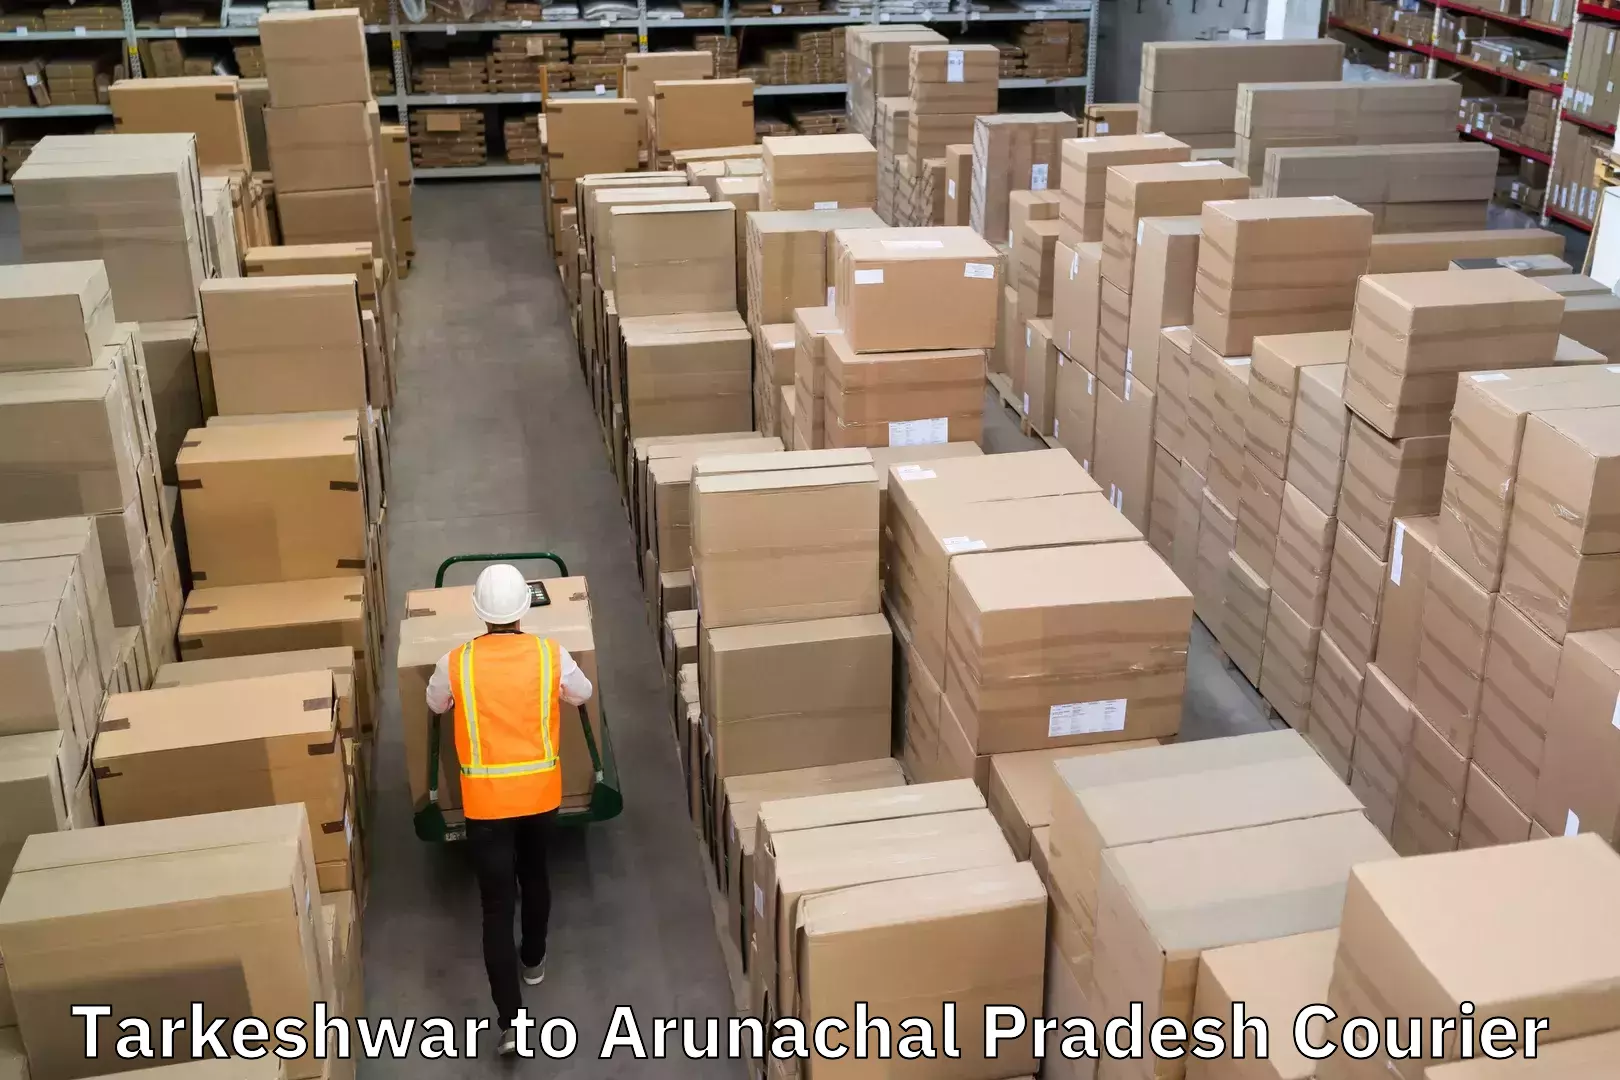 Professional courier handling Tarkeshwar to Arunachal Pradesh